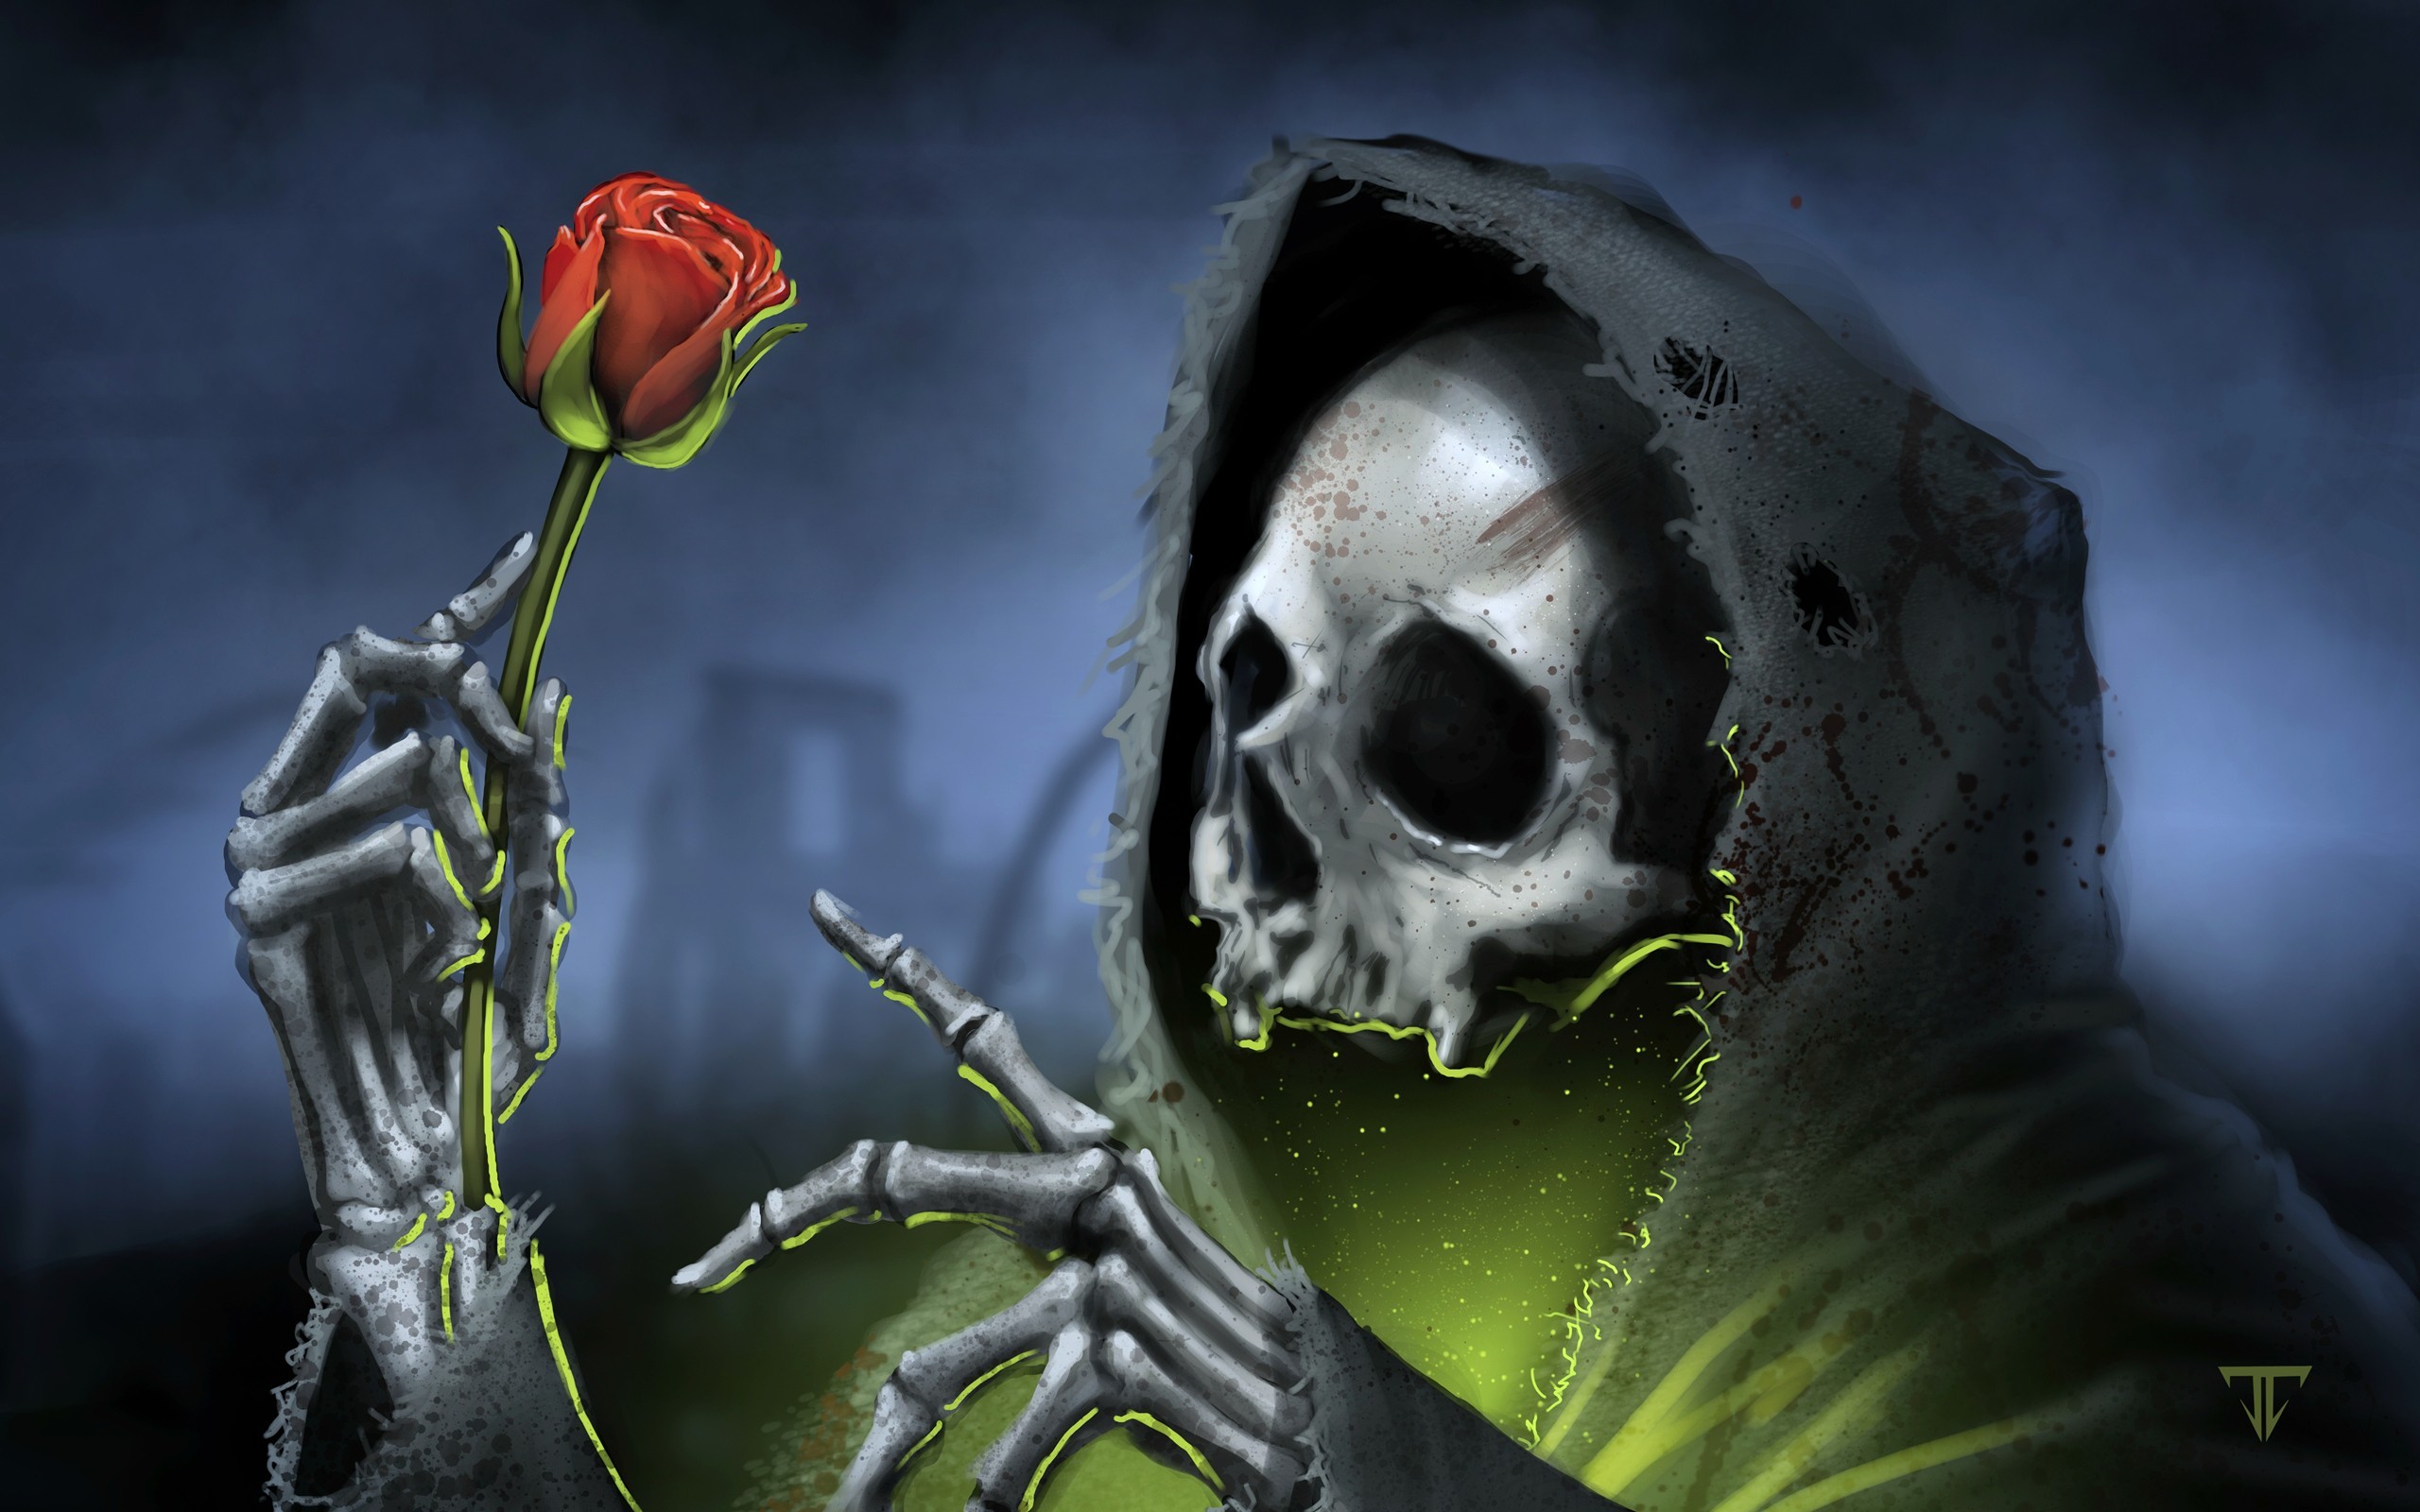 General 2560x1600 dark death rose fantasy art flowers plants bones skull digital art watermarked